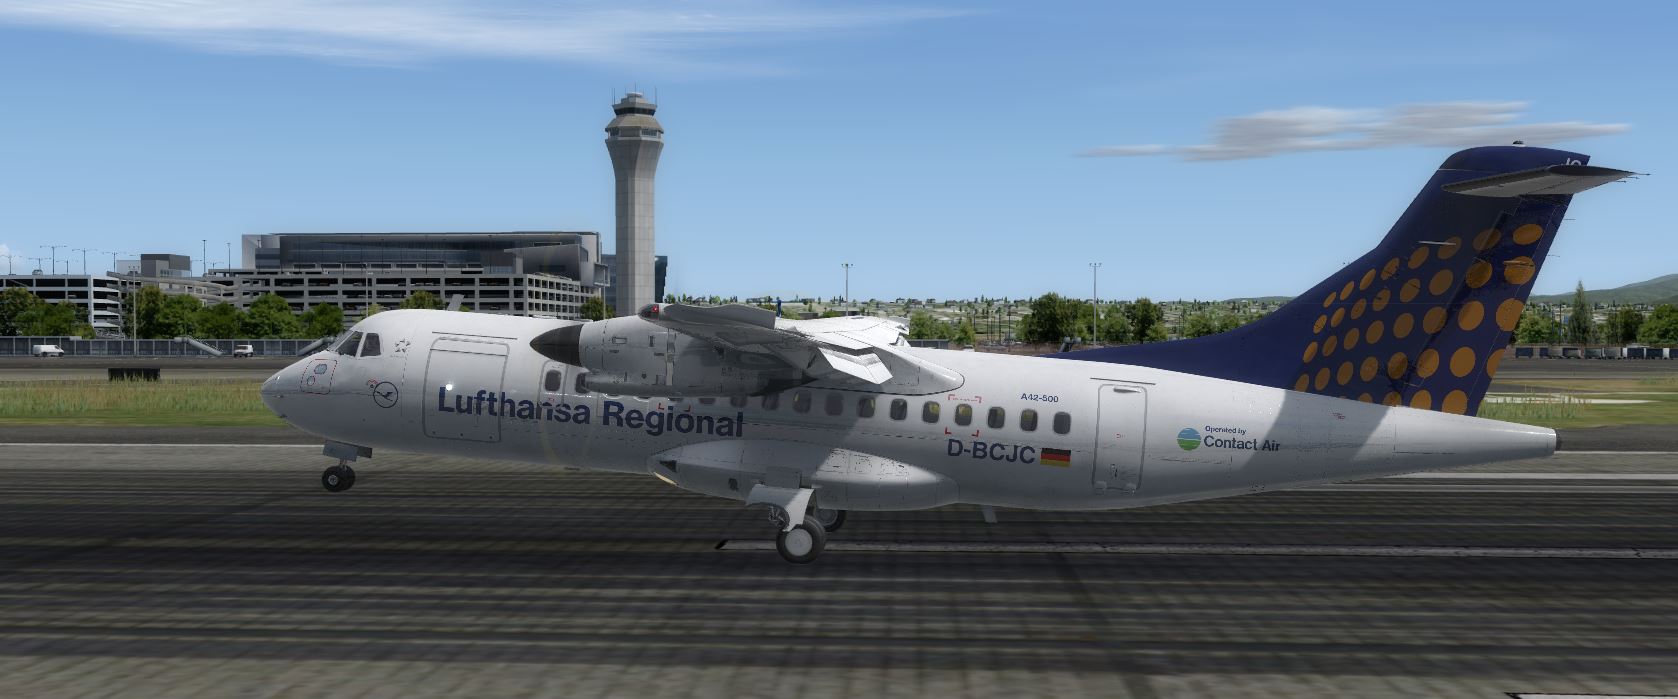 ATR42-500 Lufthansa-1900 